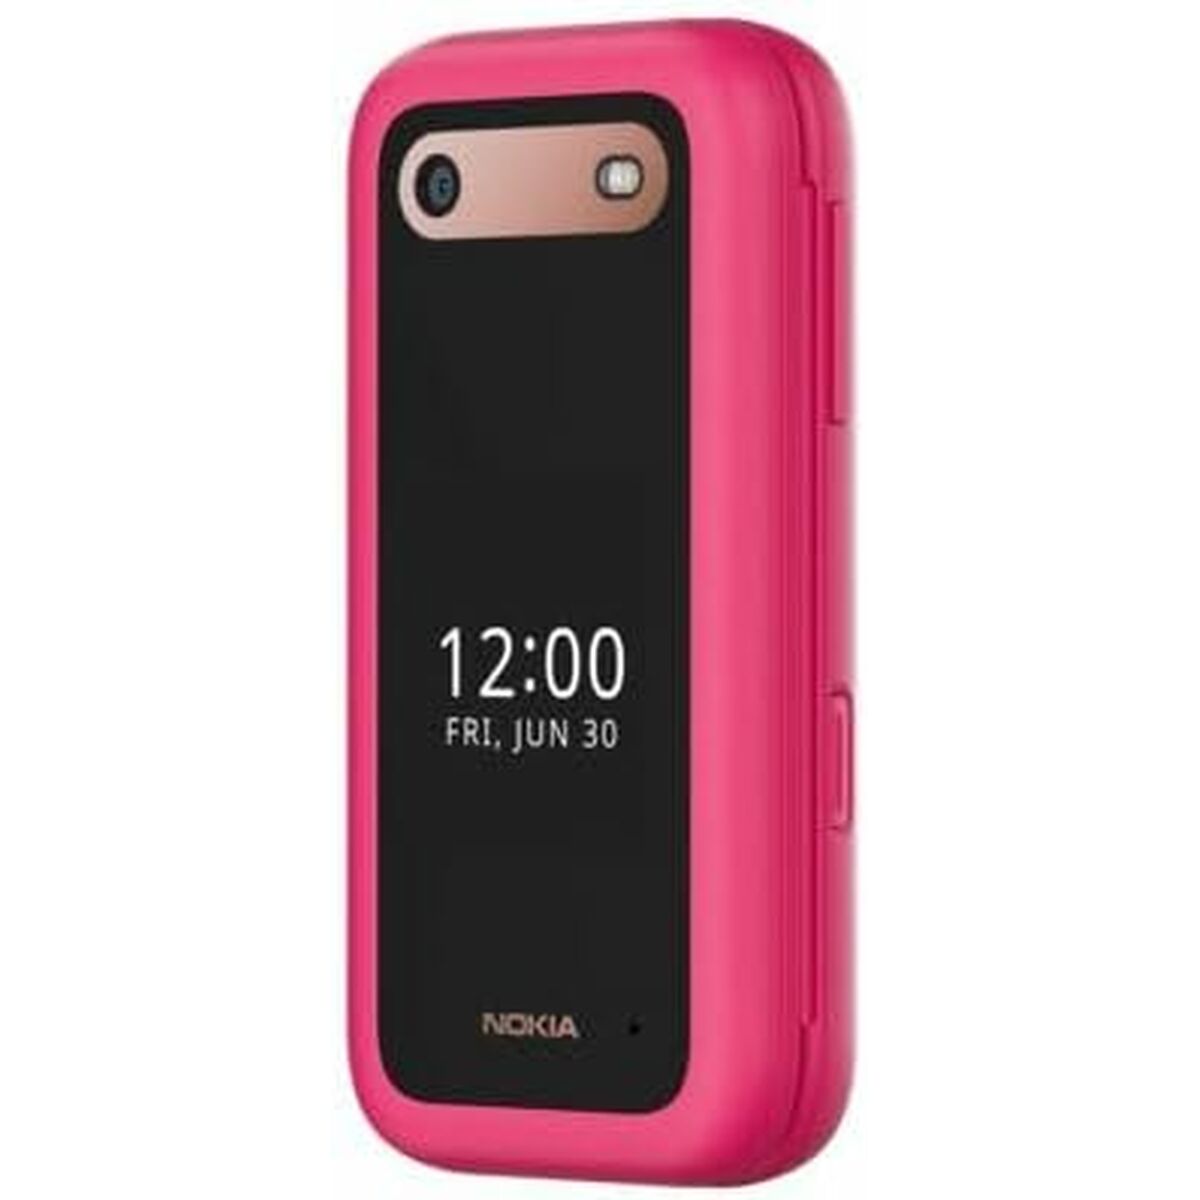 Nokia 2660 FLIP Pink Mobiltelefon 2,8" 128 MB